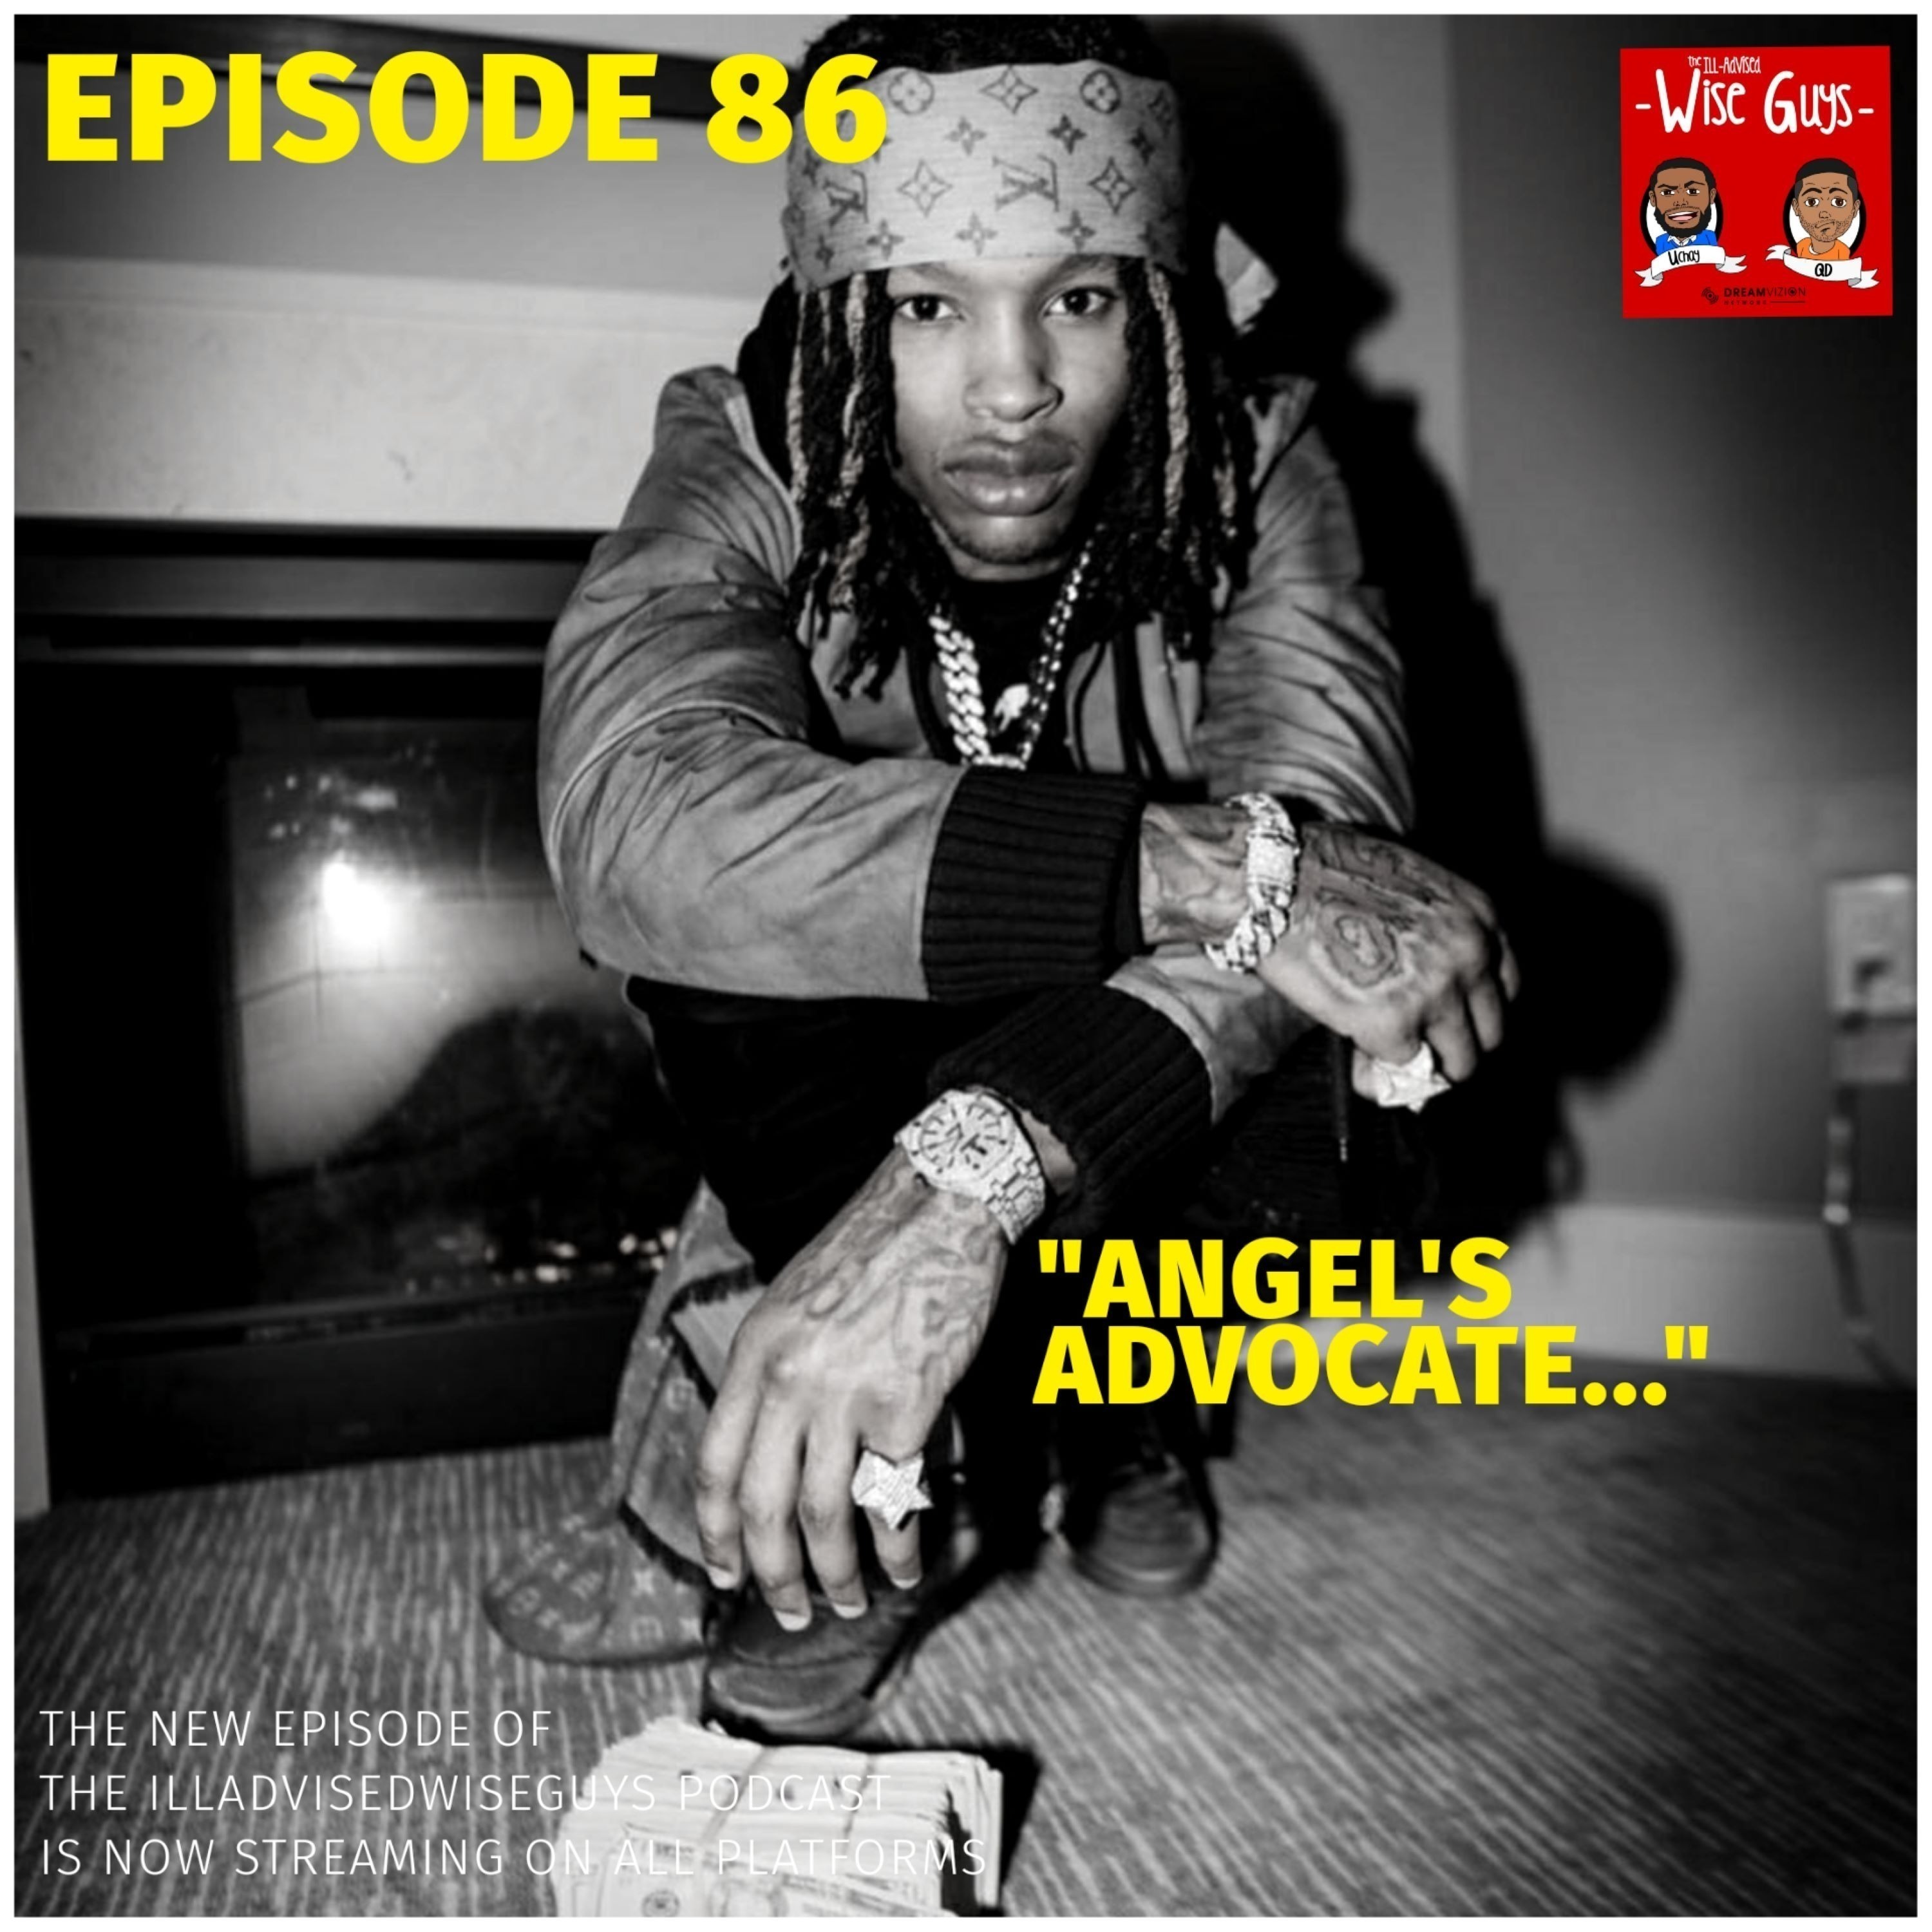 Episode 86 - "Angel's Advocate..." Image